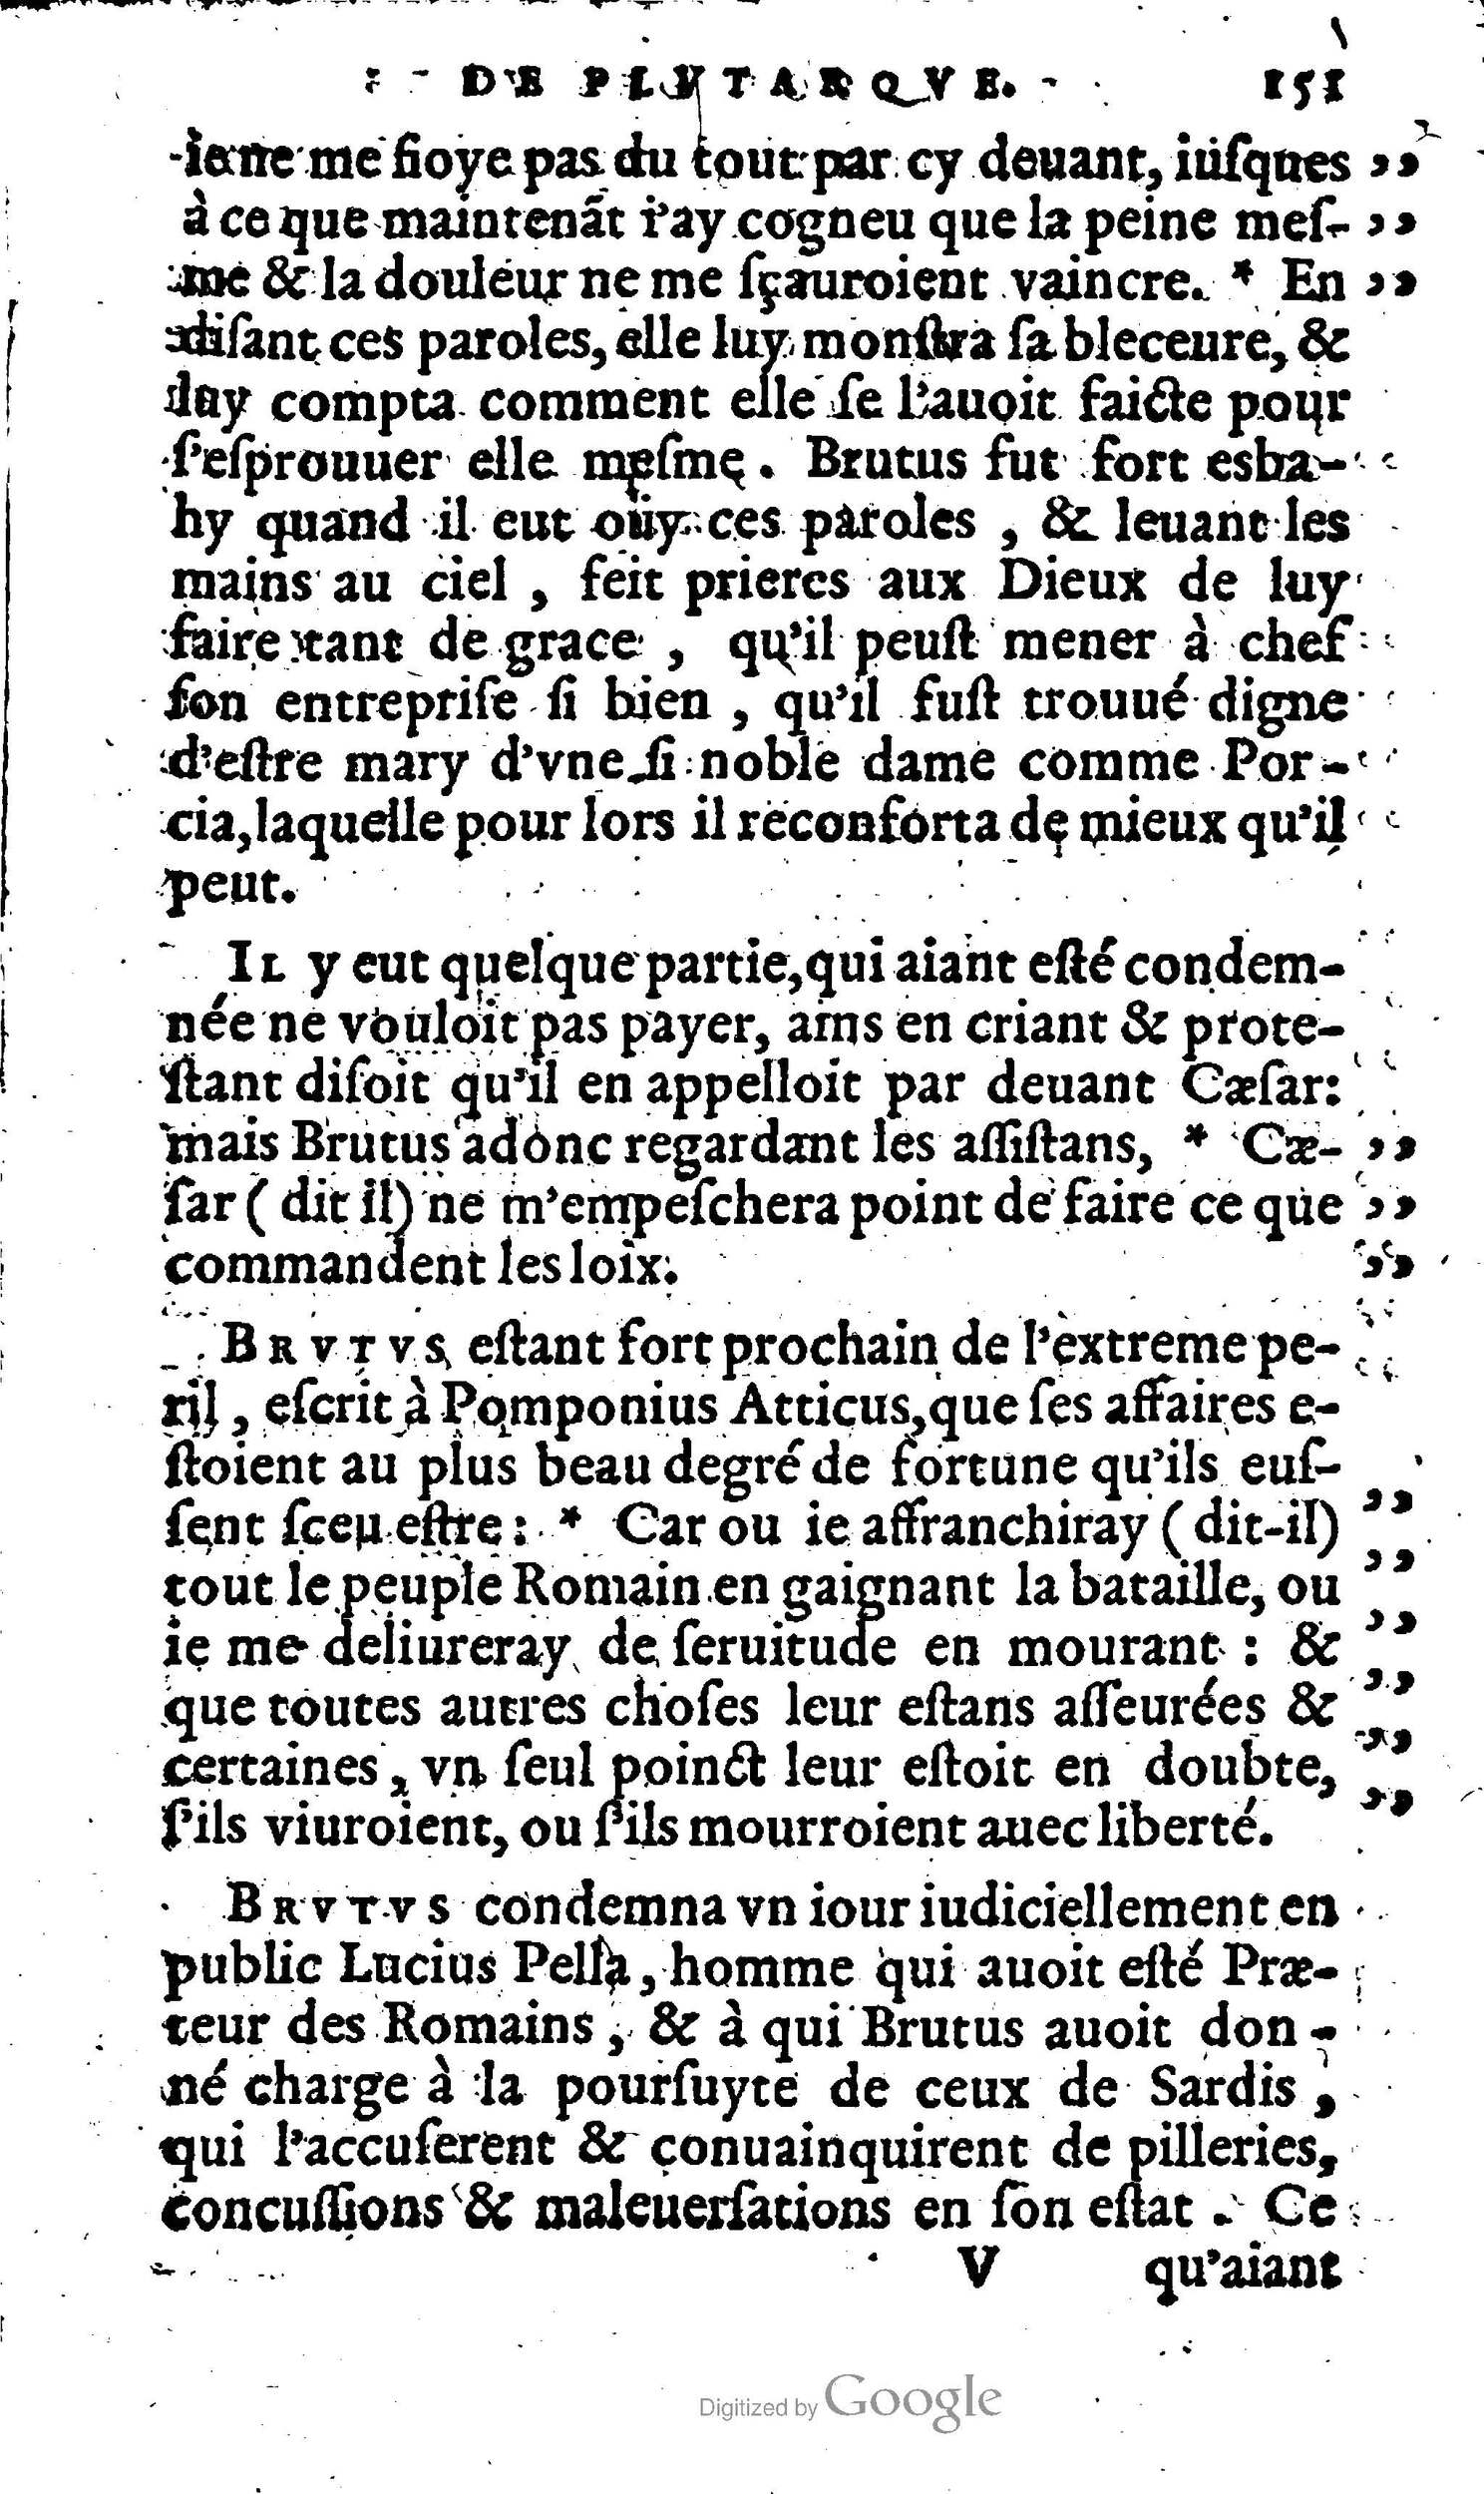 1568 - Willem Silvius - Trésor des vies de Plutarque - Anvers Plantin-Moretus_Page_320.jpg